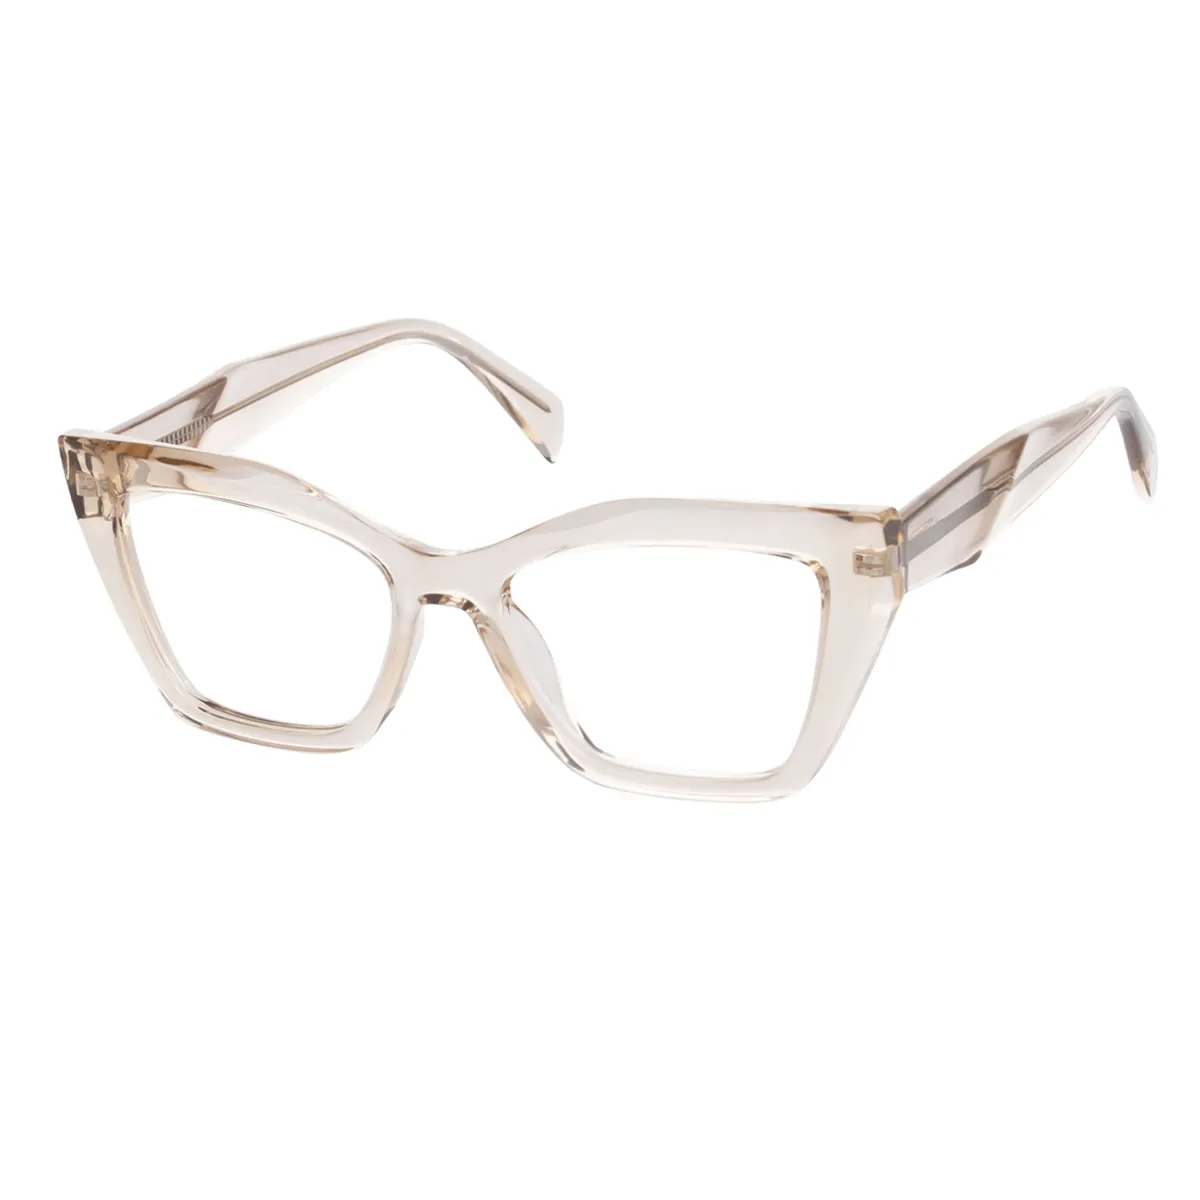 Panthera - Cat-eye Cream Glasses for Women